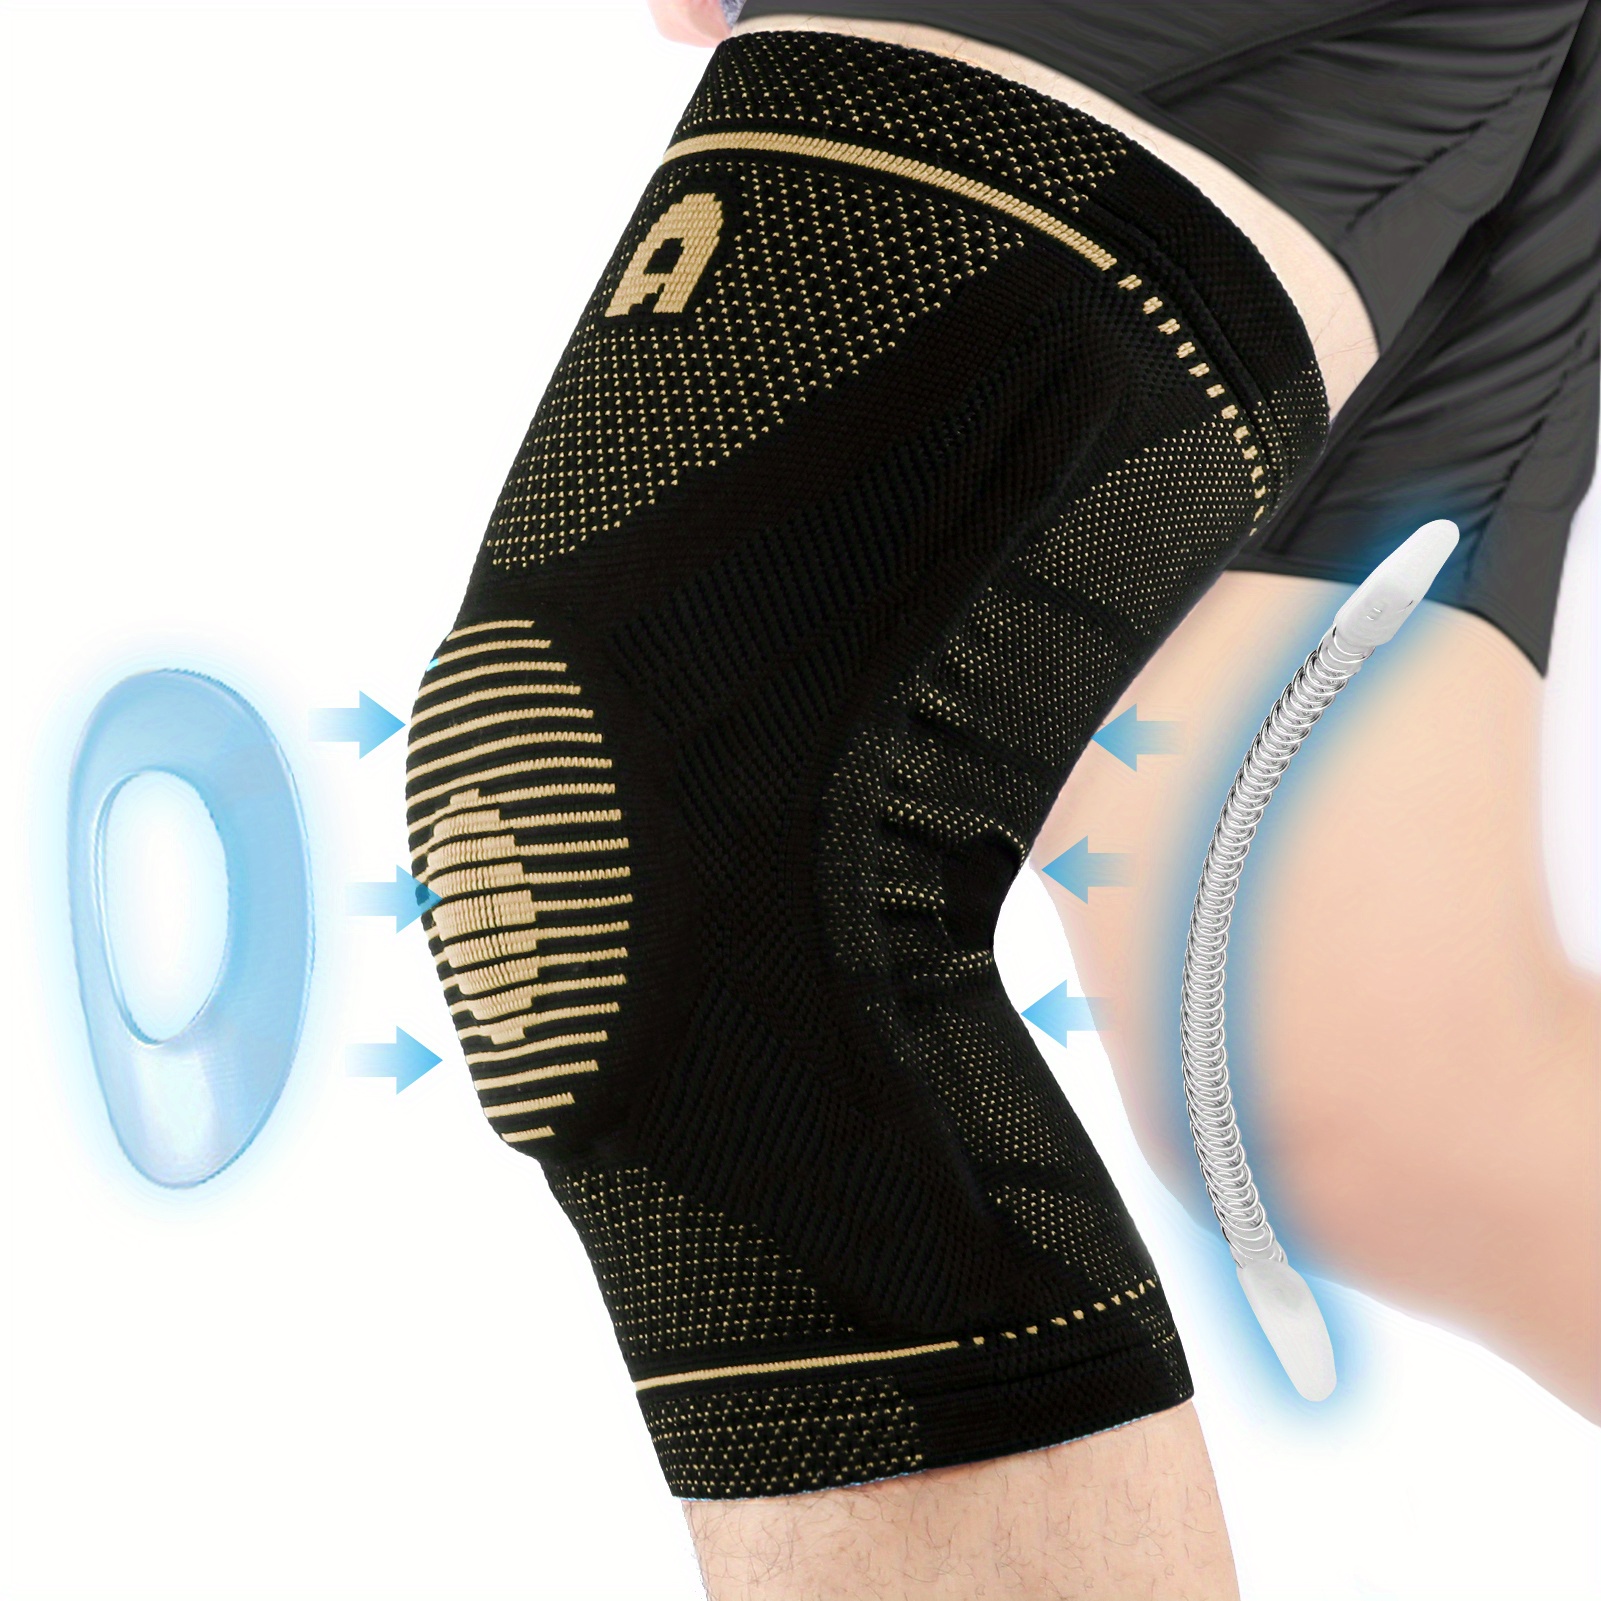 Professional Knee Brace Compression Sleeve - Best Knee Braces for